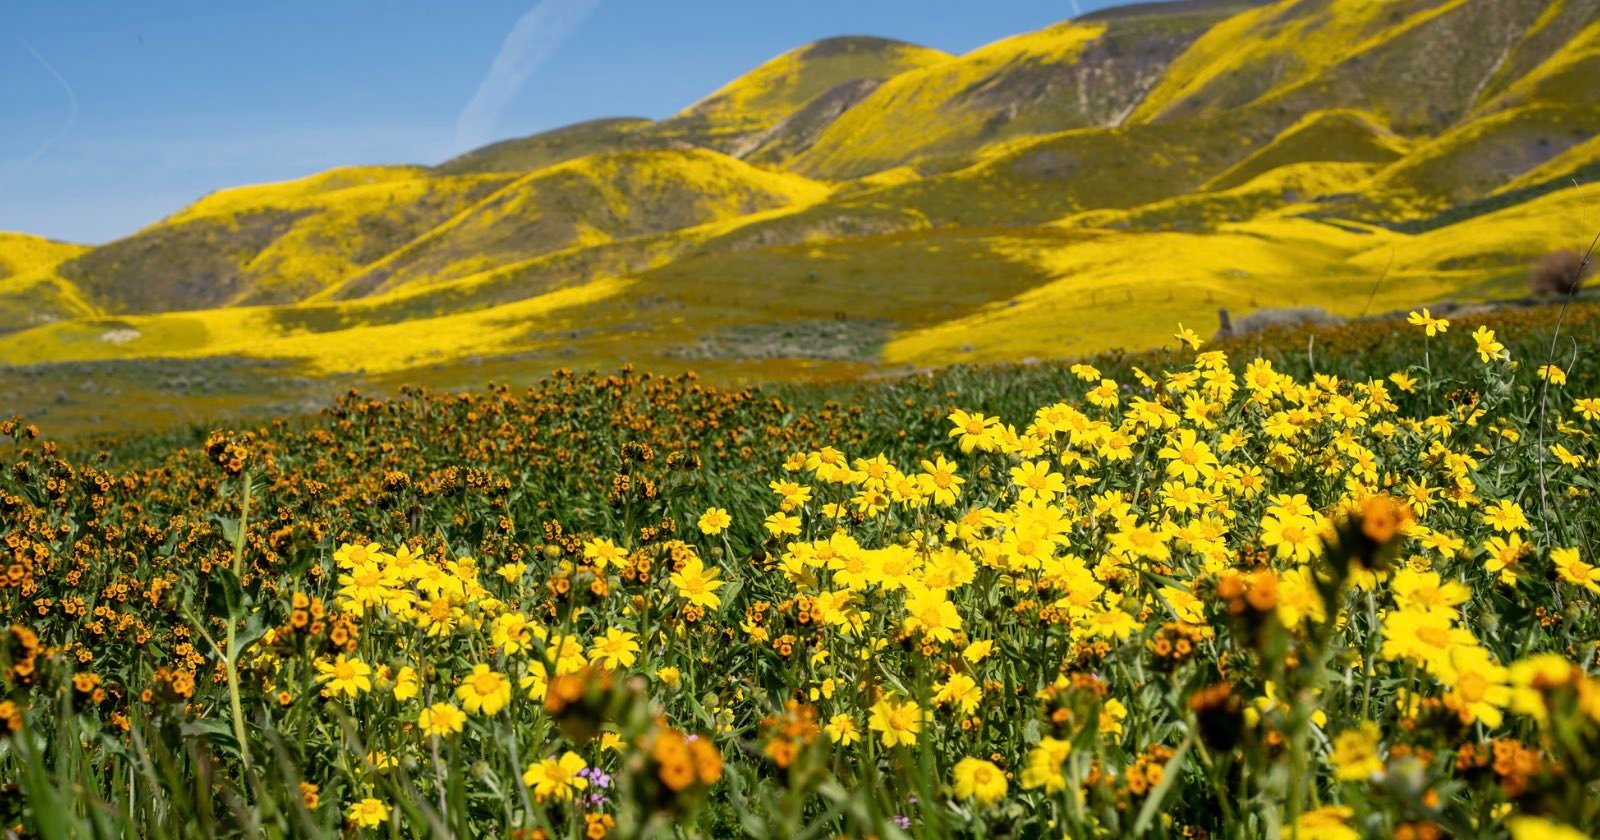  photographers should prepare another impressive california superbloom 